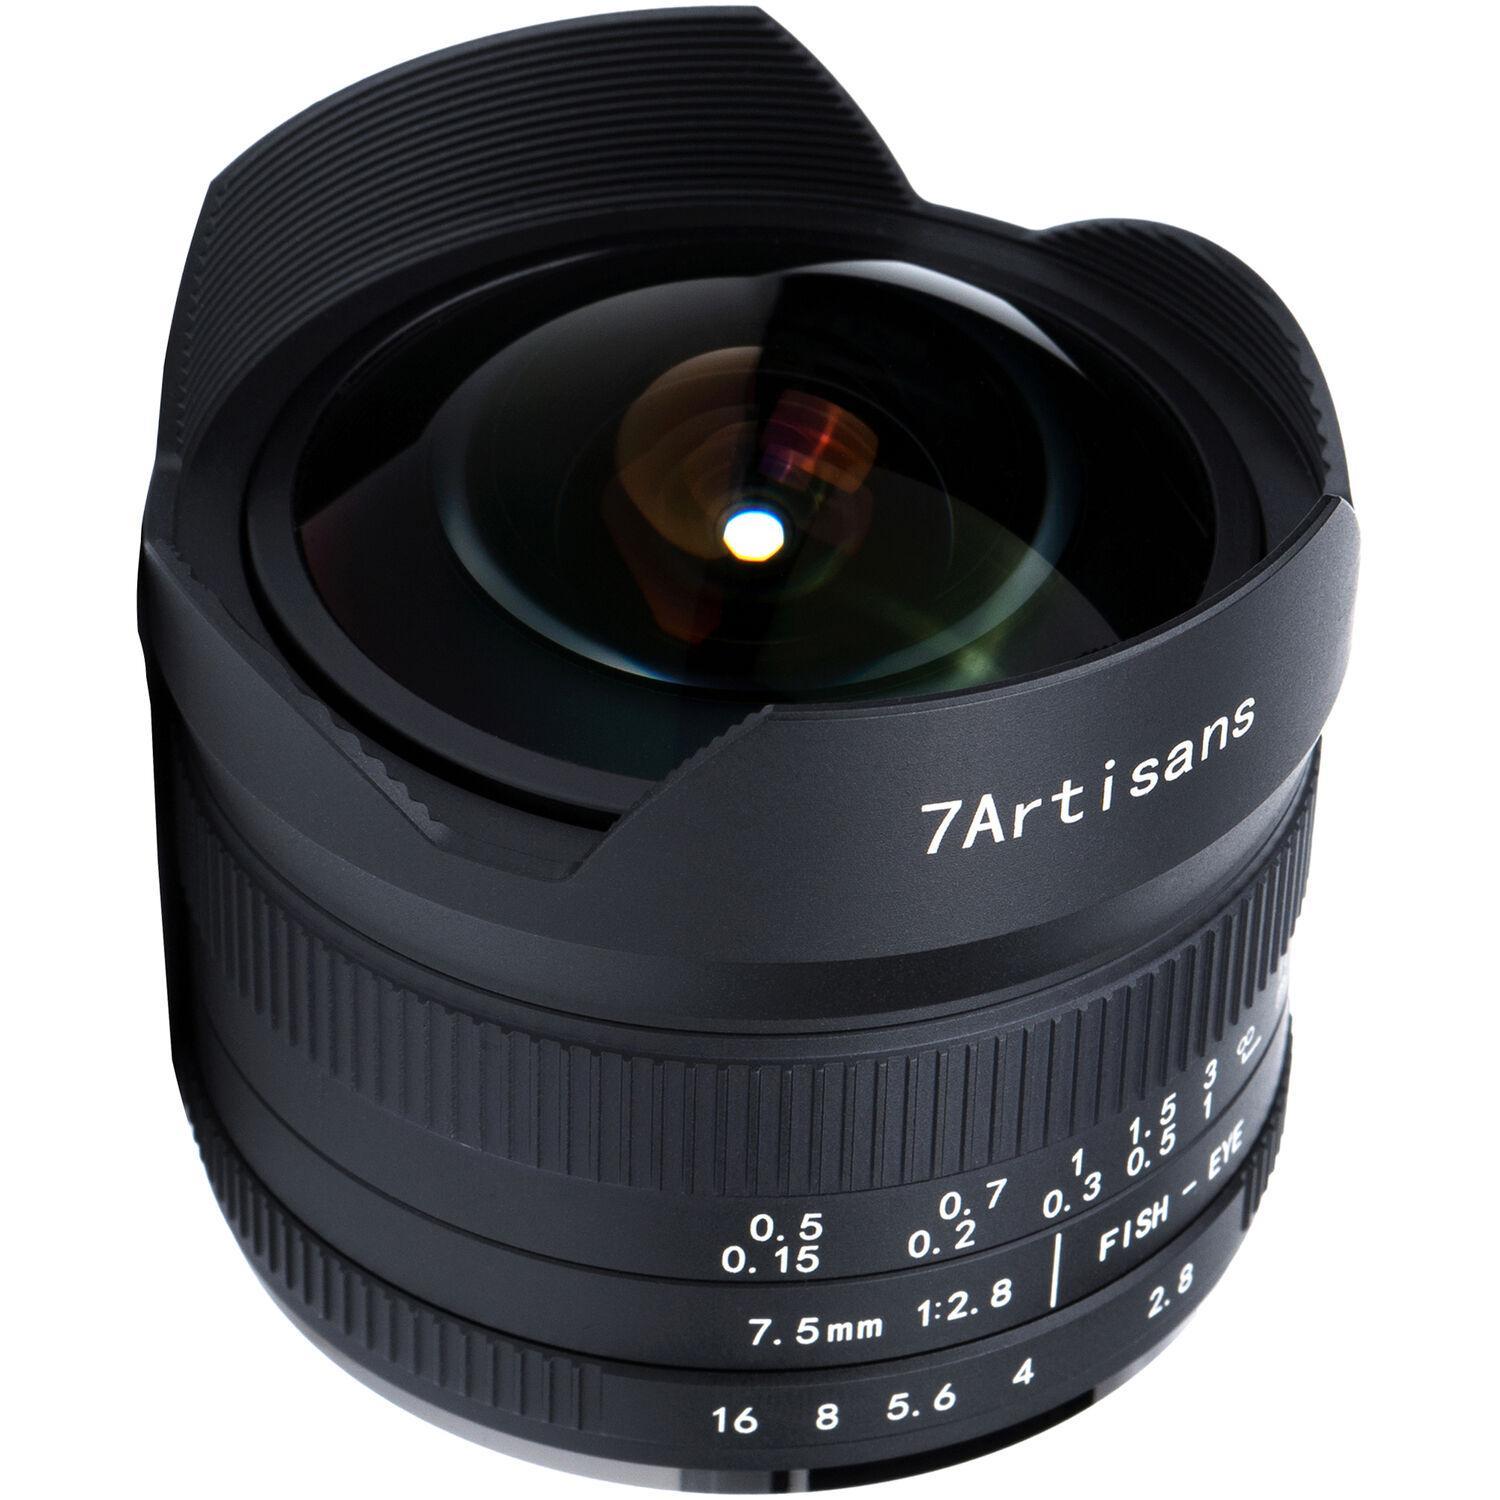 7artisans 7.5mm f/2.8 to f/22 II Lens for M43 (Panasonic Olympus)